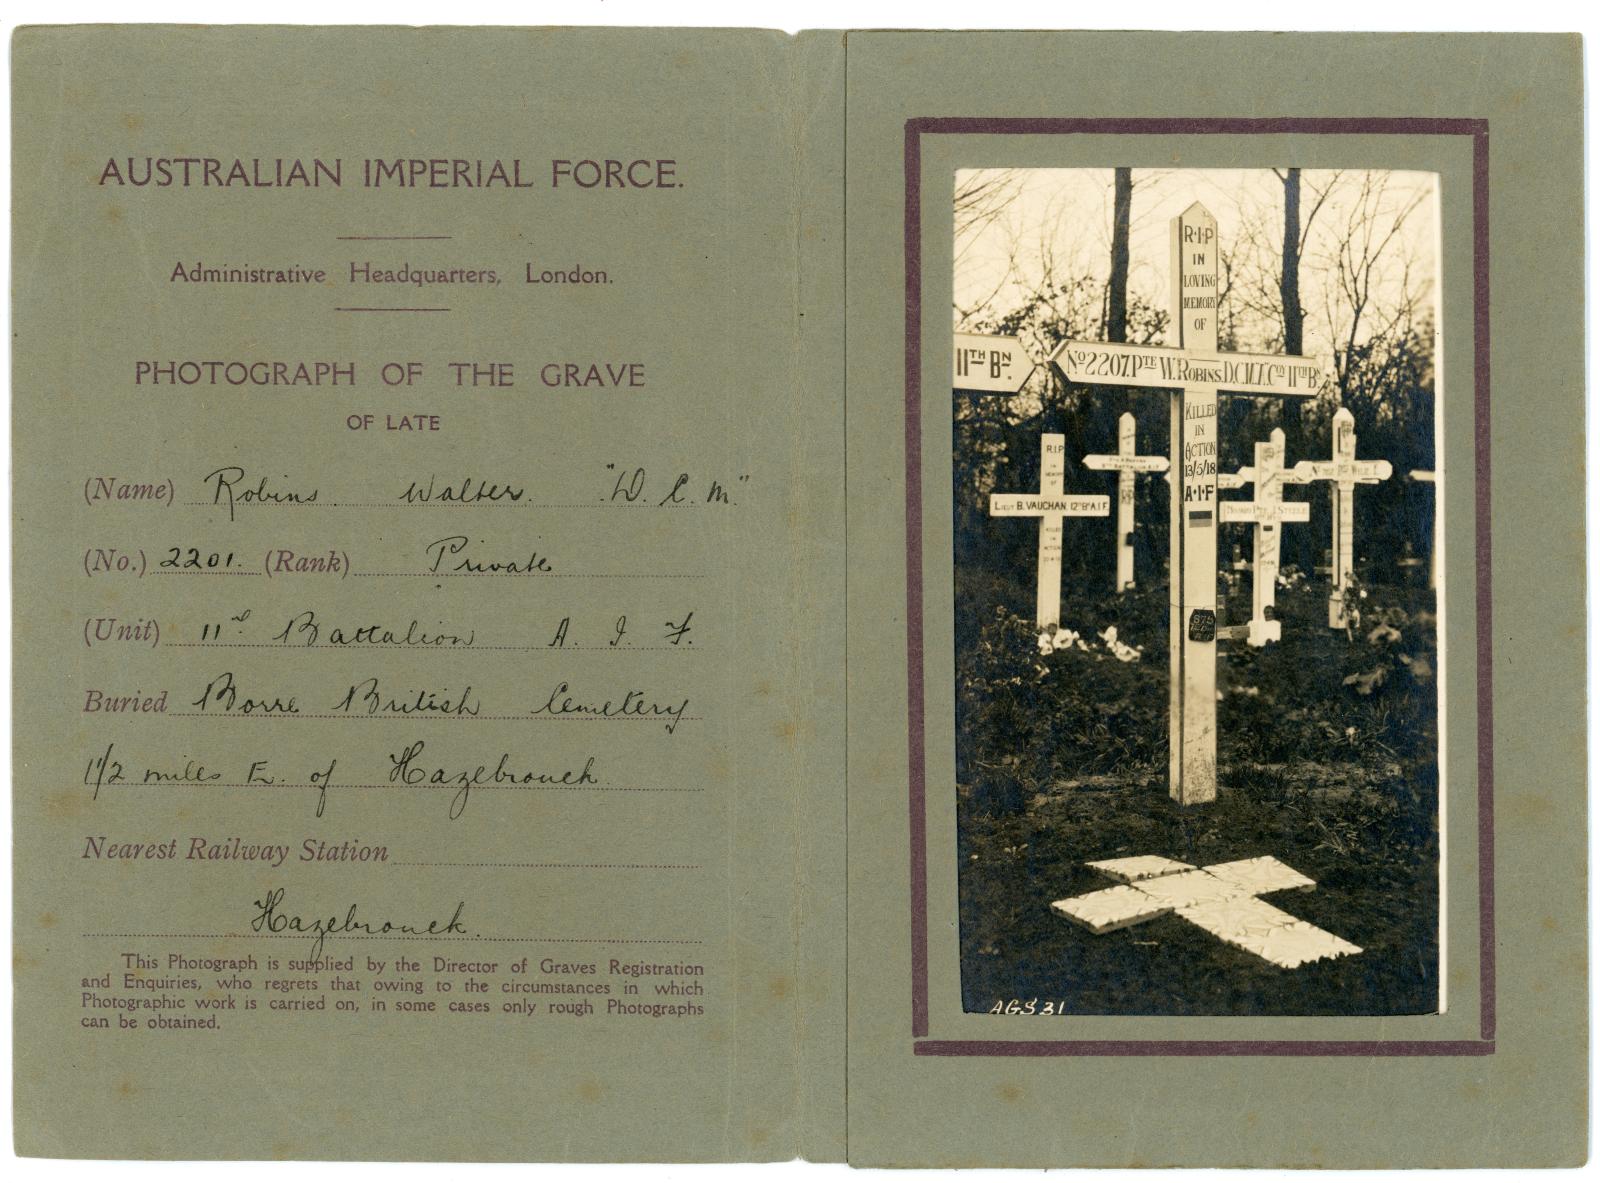 Black & white photograph of Pte ROBINS gravesite in A.I.F folder